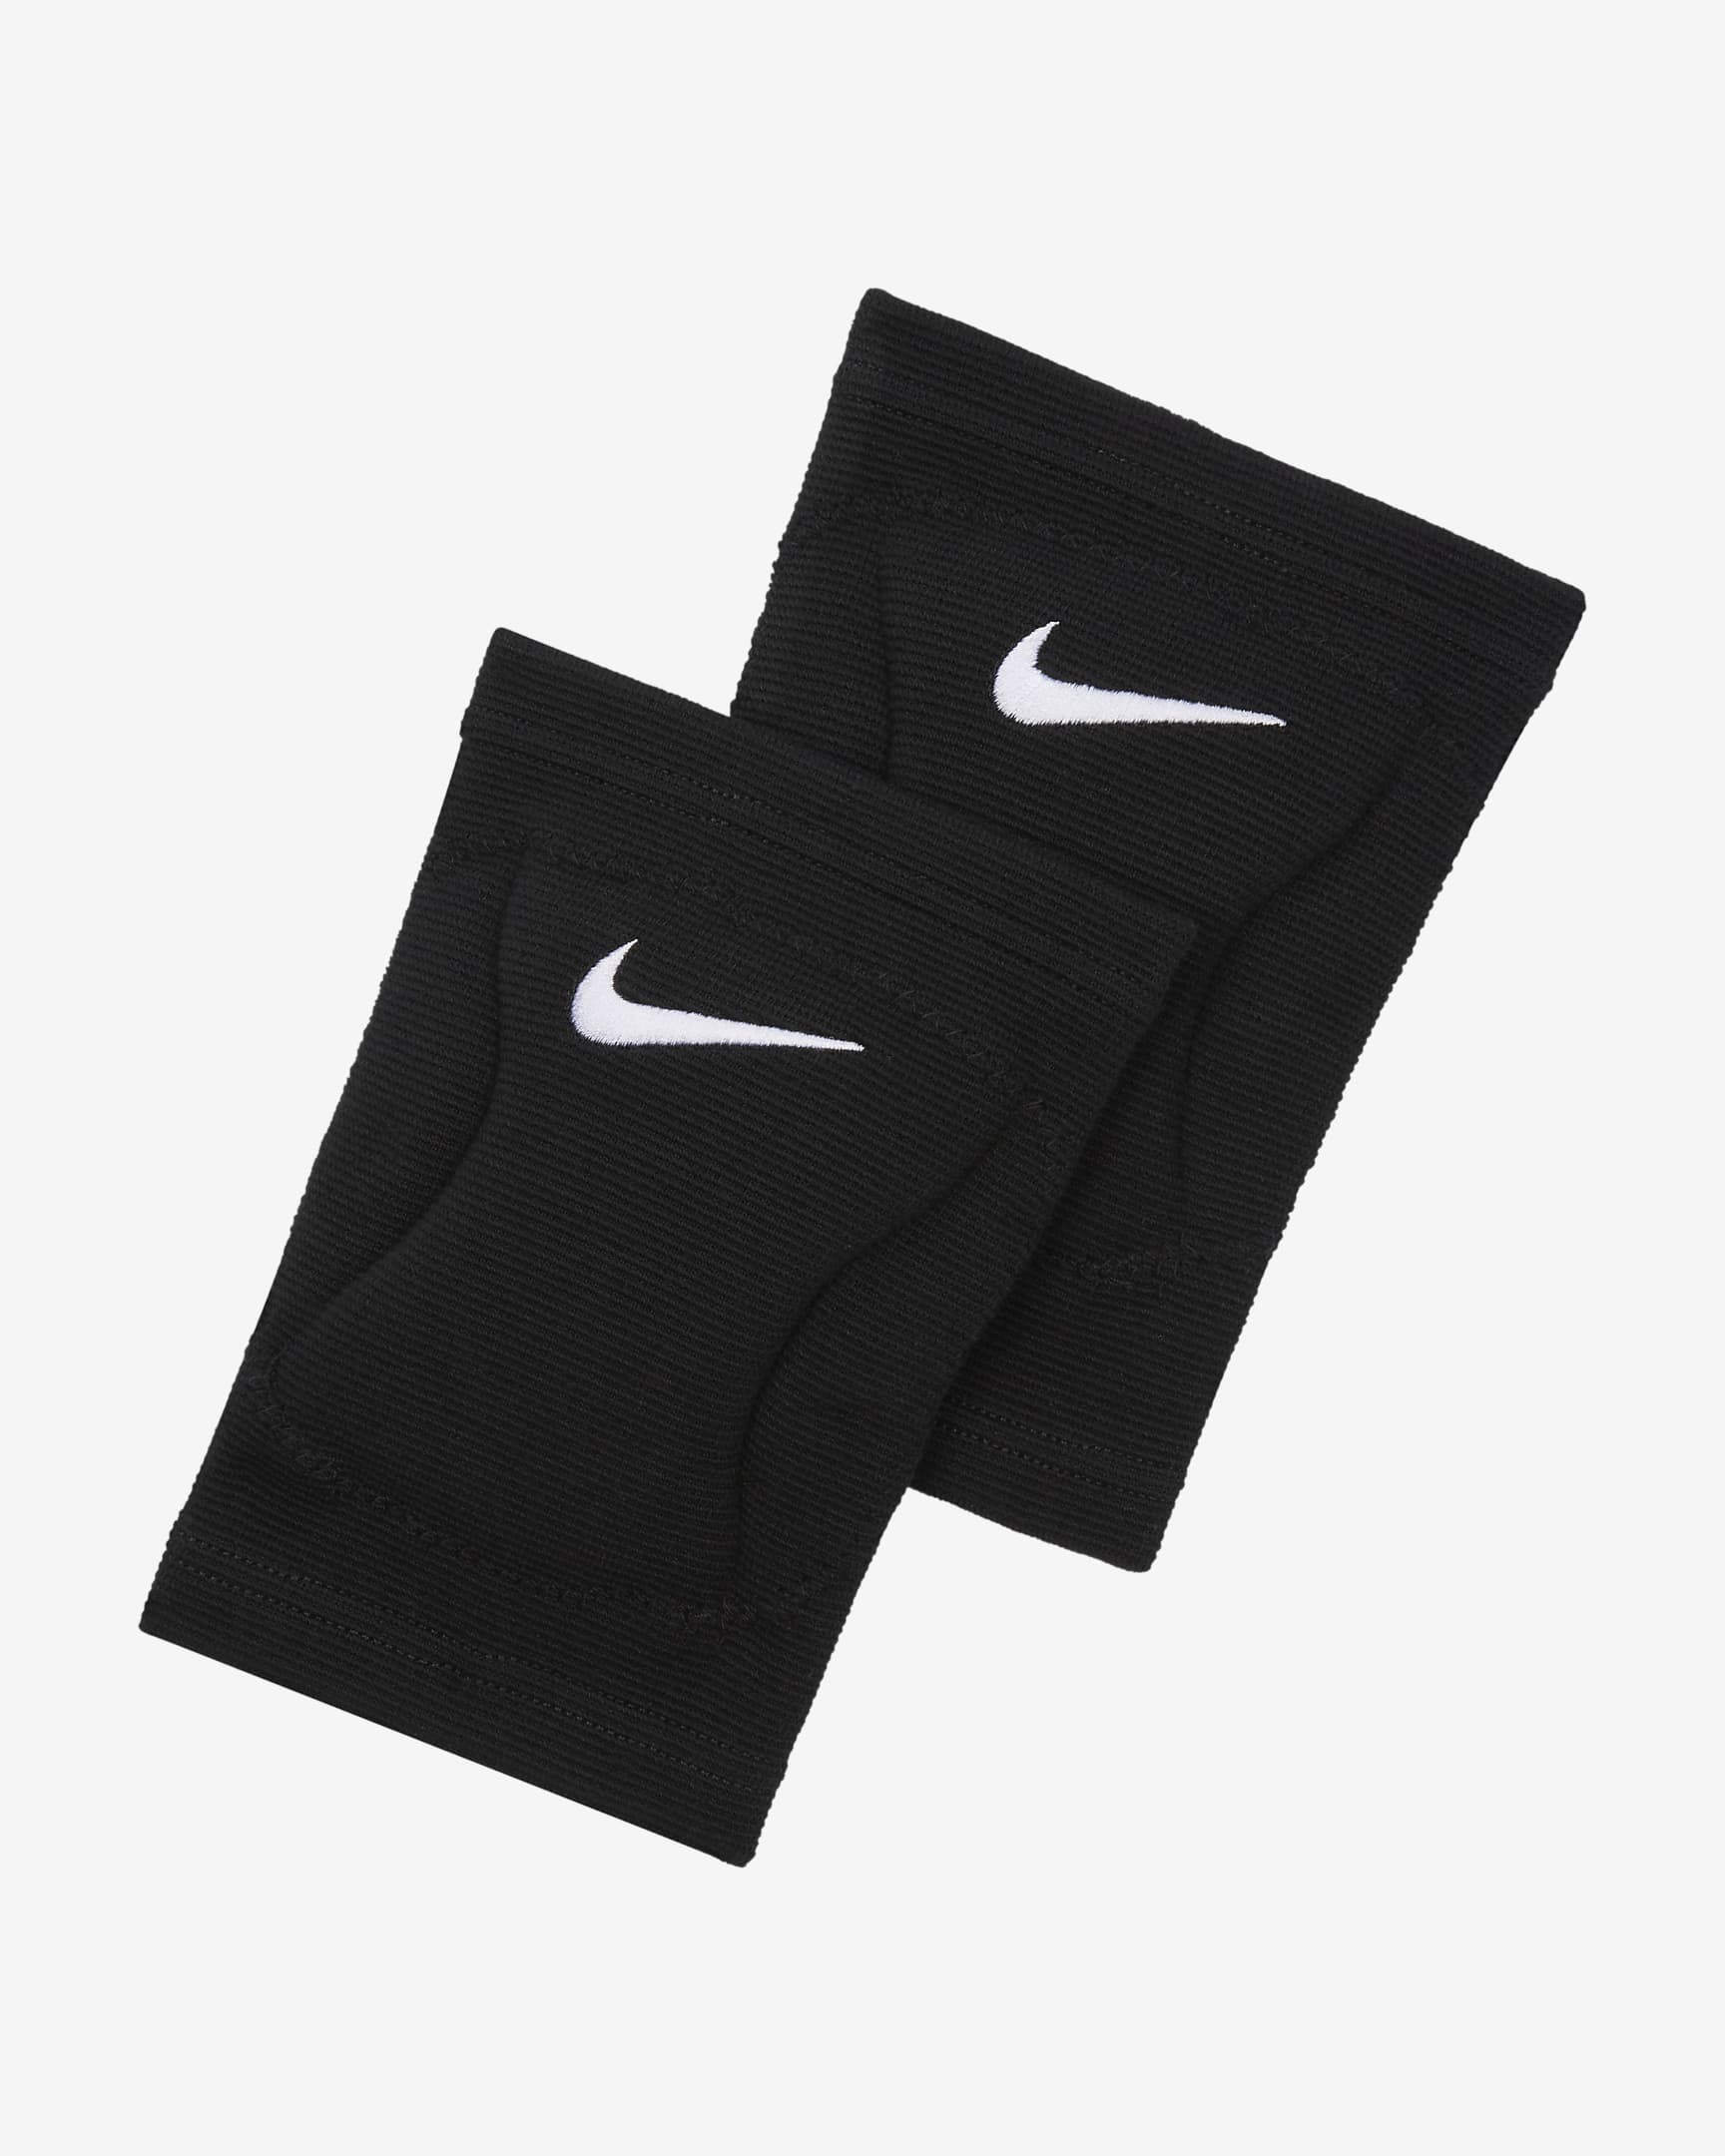 Nike Streak Volleyball Knee Pads - Black